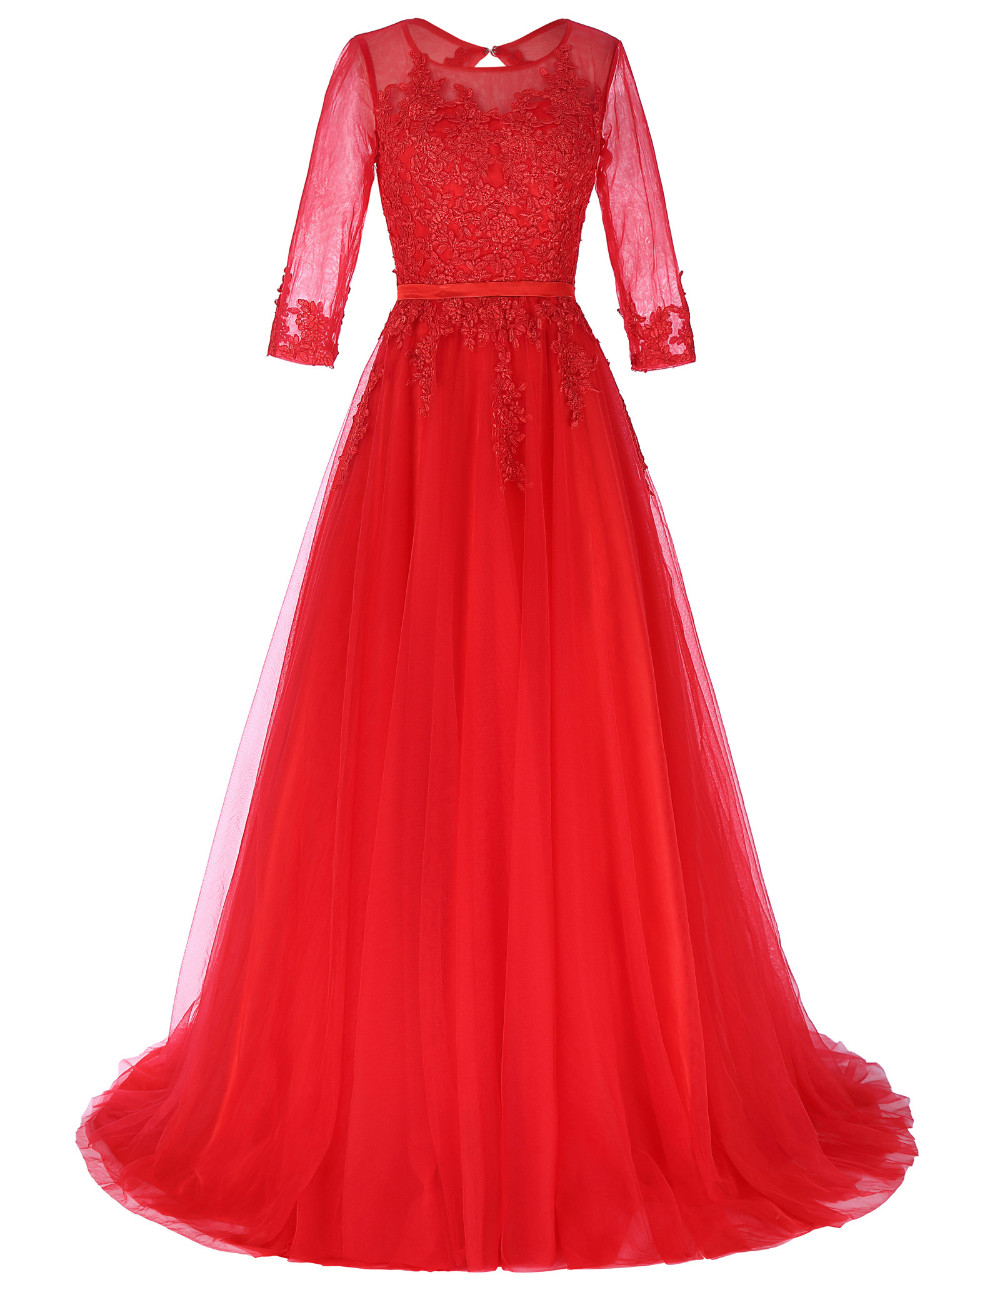 Appliques Tulle Lace Long Red Wedding Dress 2017 Arabic 3/4 Sleeve Vestidos De Noiva Robe De Mariage Bridal Dress